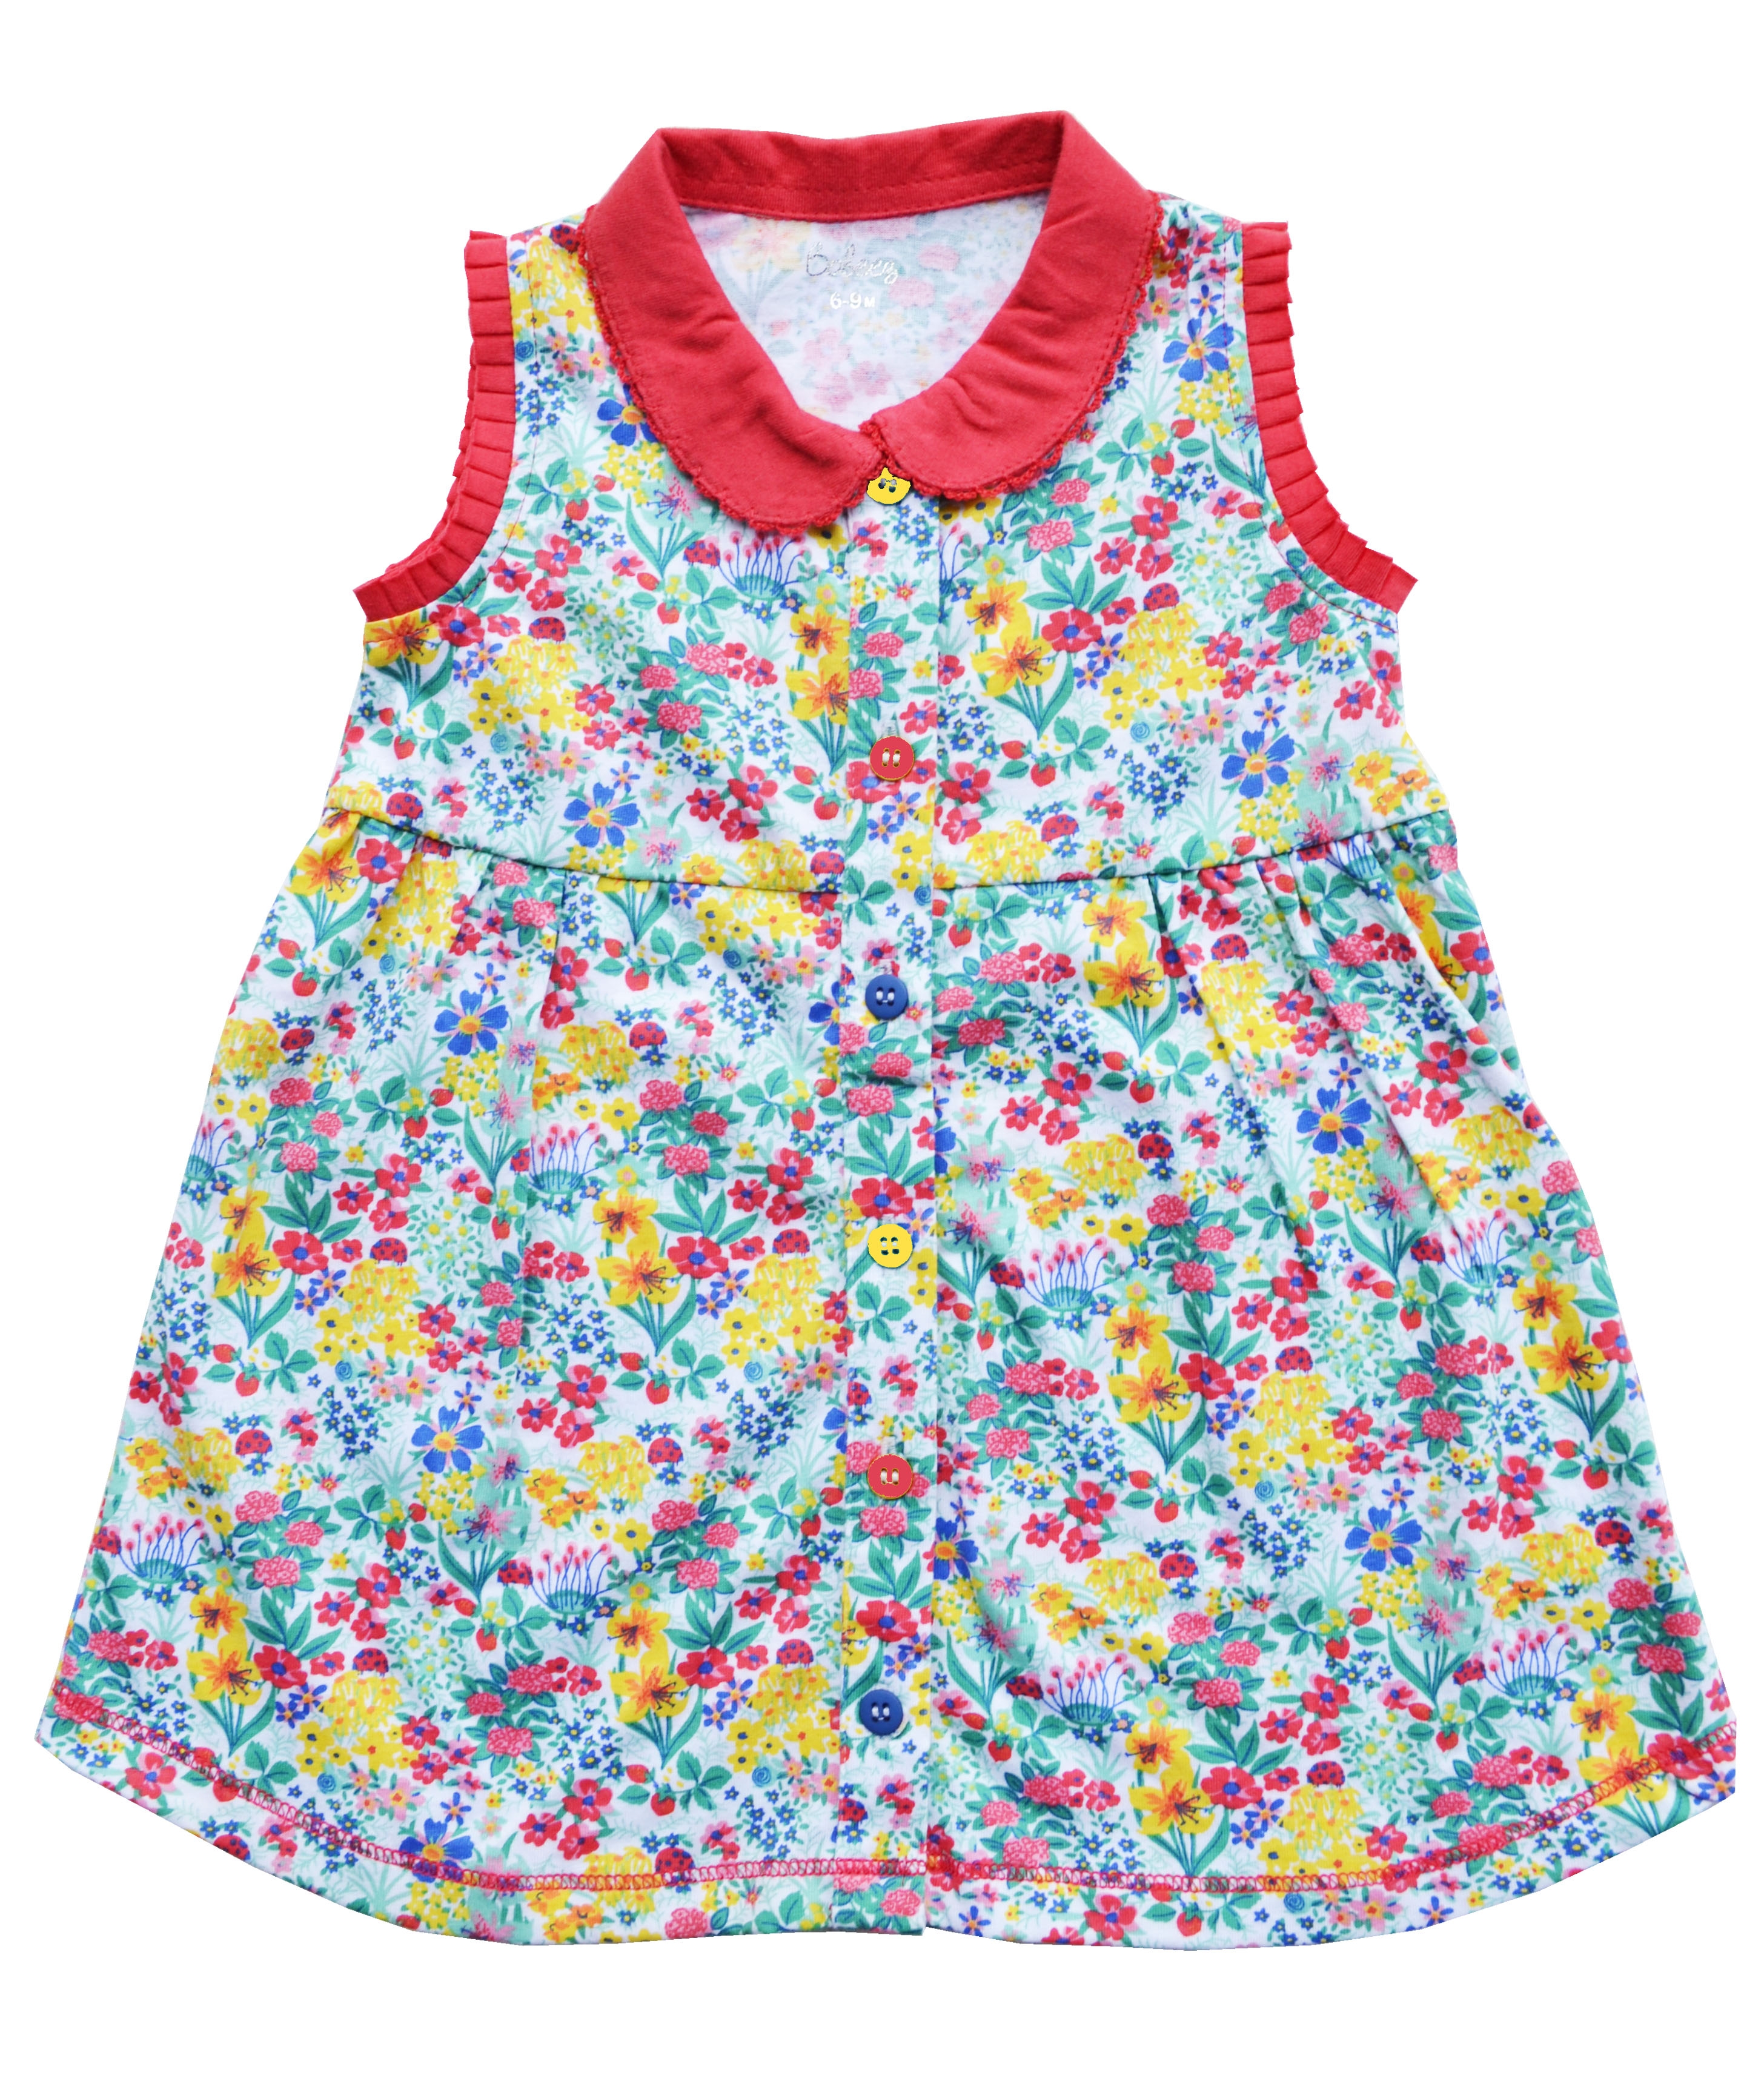 Allover Multicolored Flower Print Sleeveless Dress (100% Cotton Jersey)